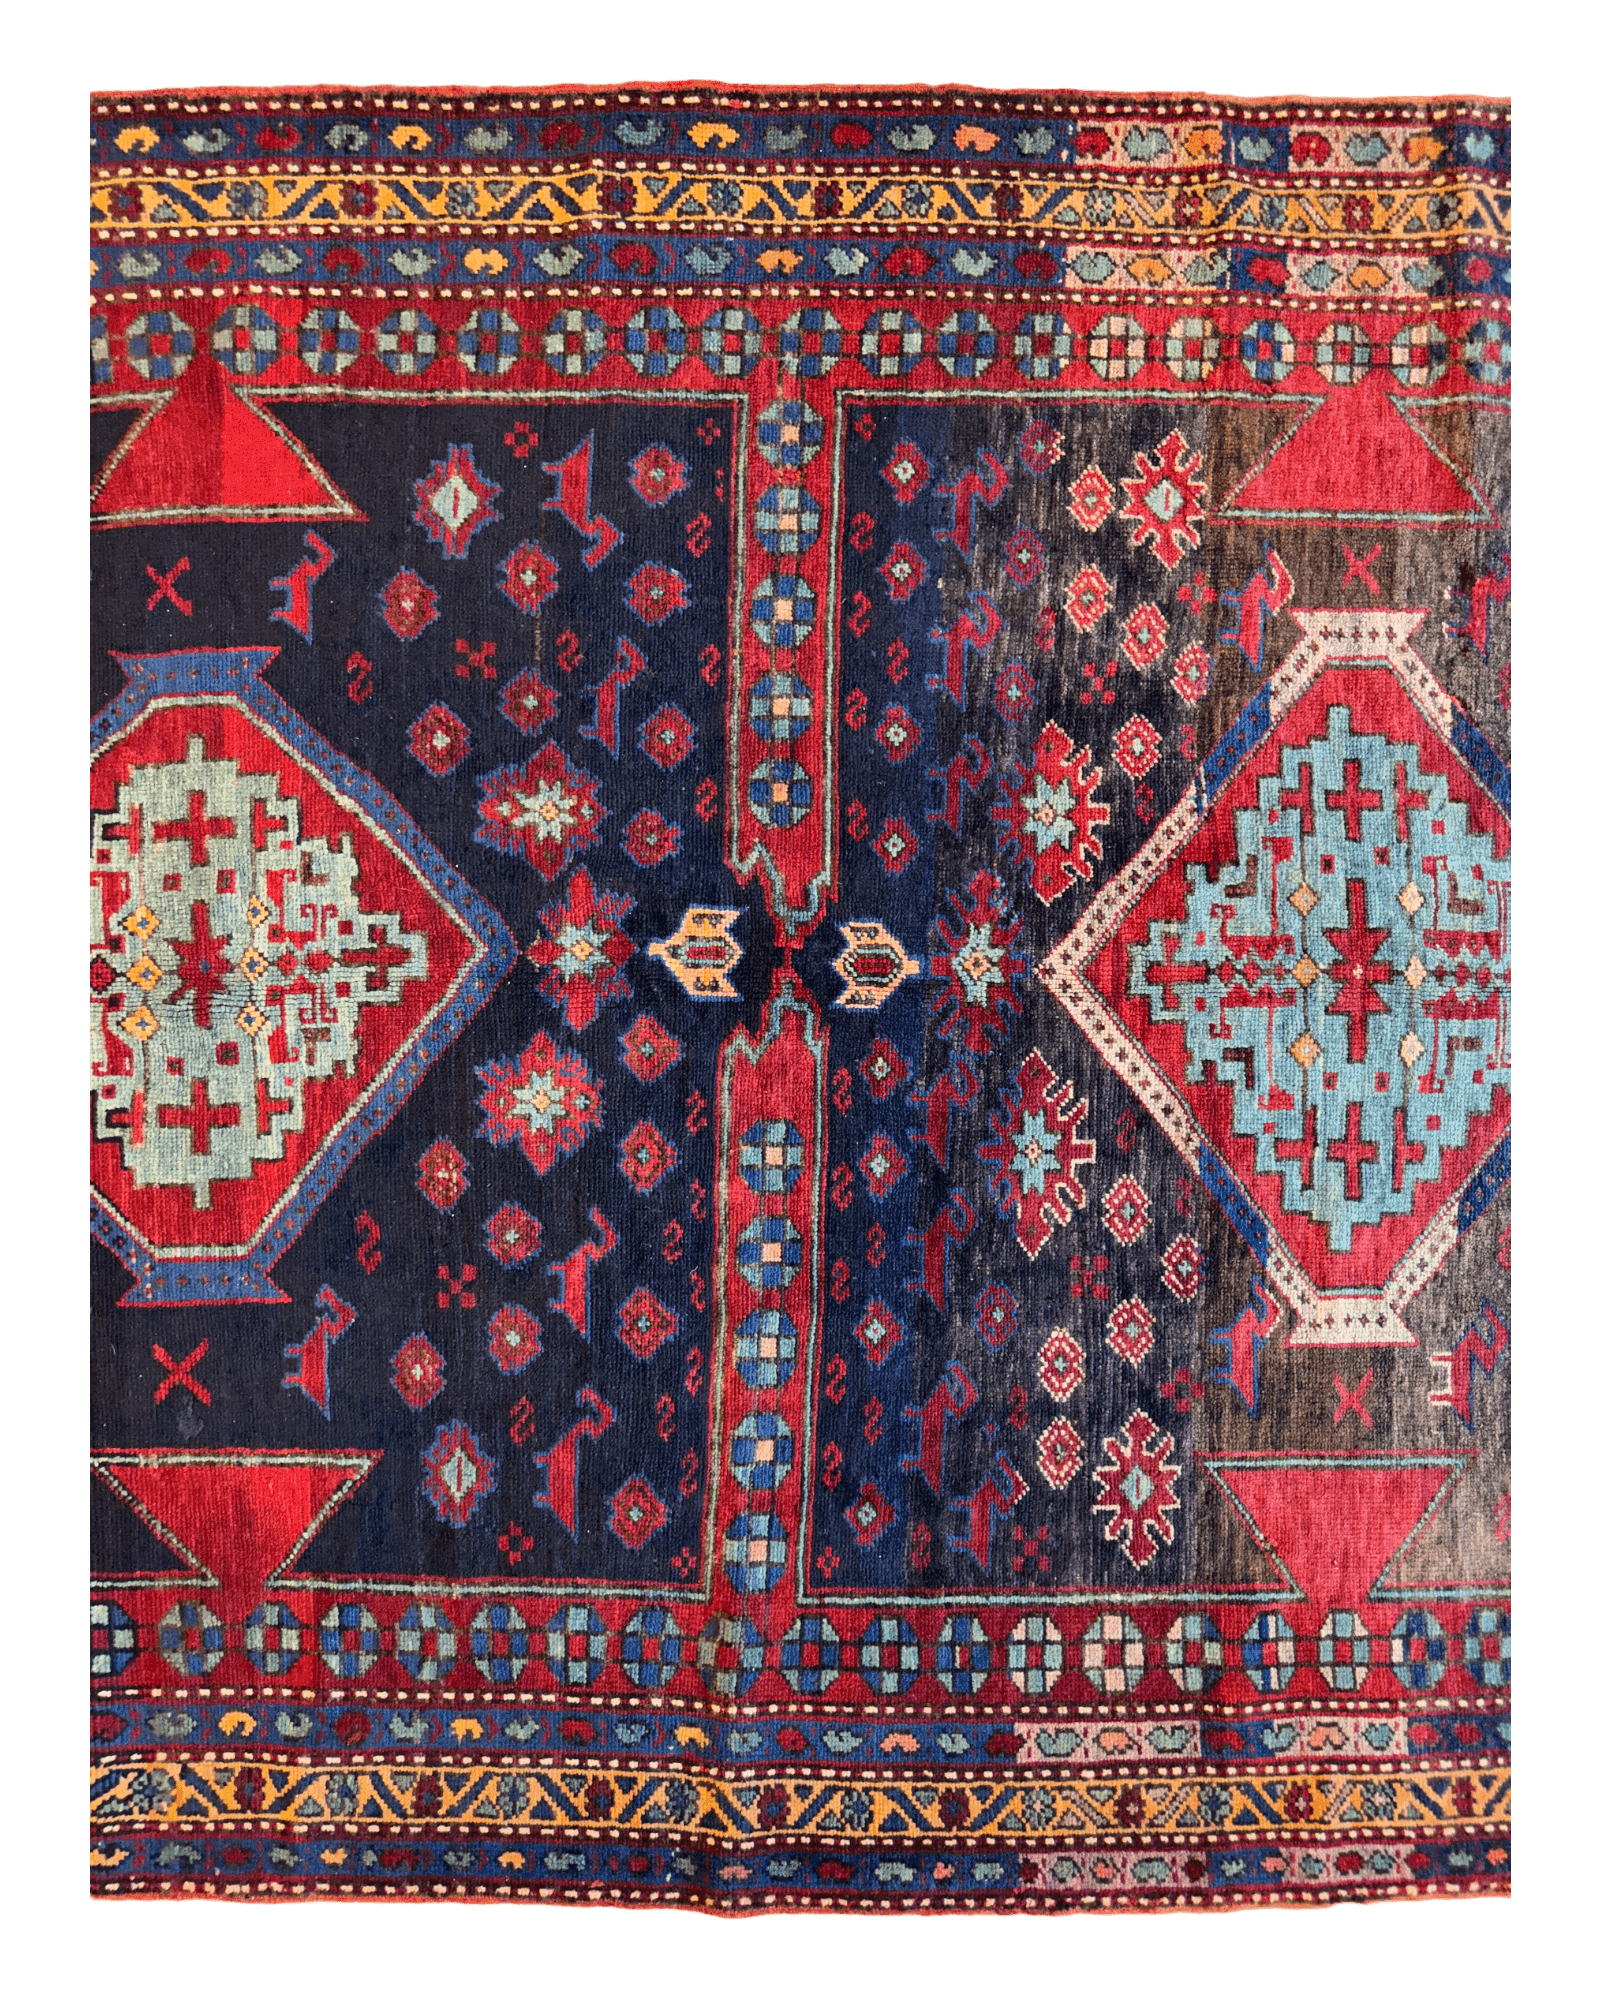 Antique Worn Late 19th Century Persian Rug 3'3” x 6